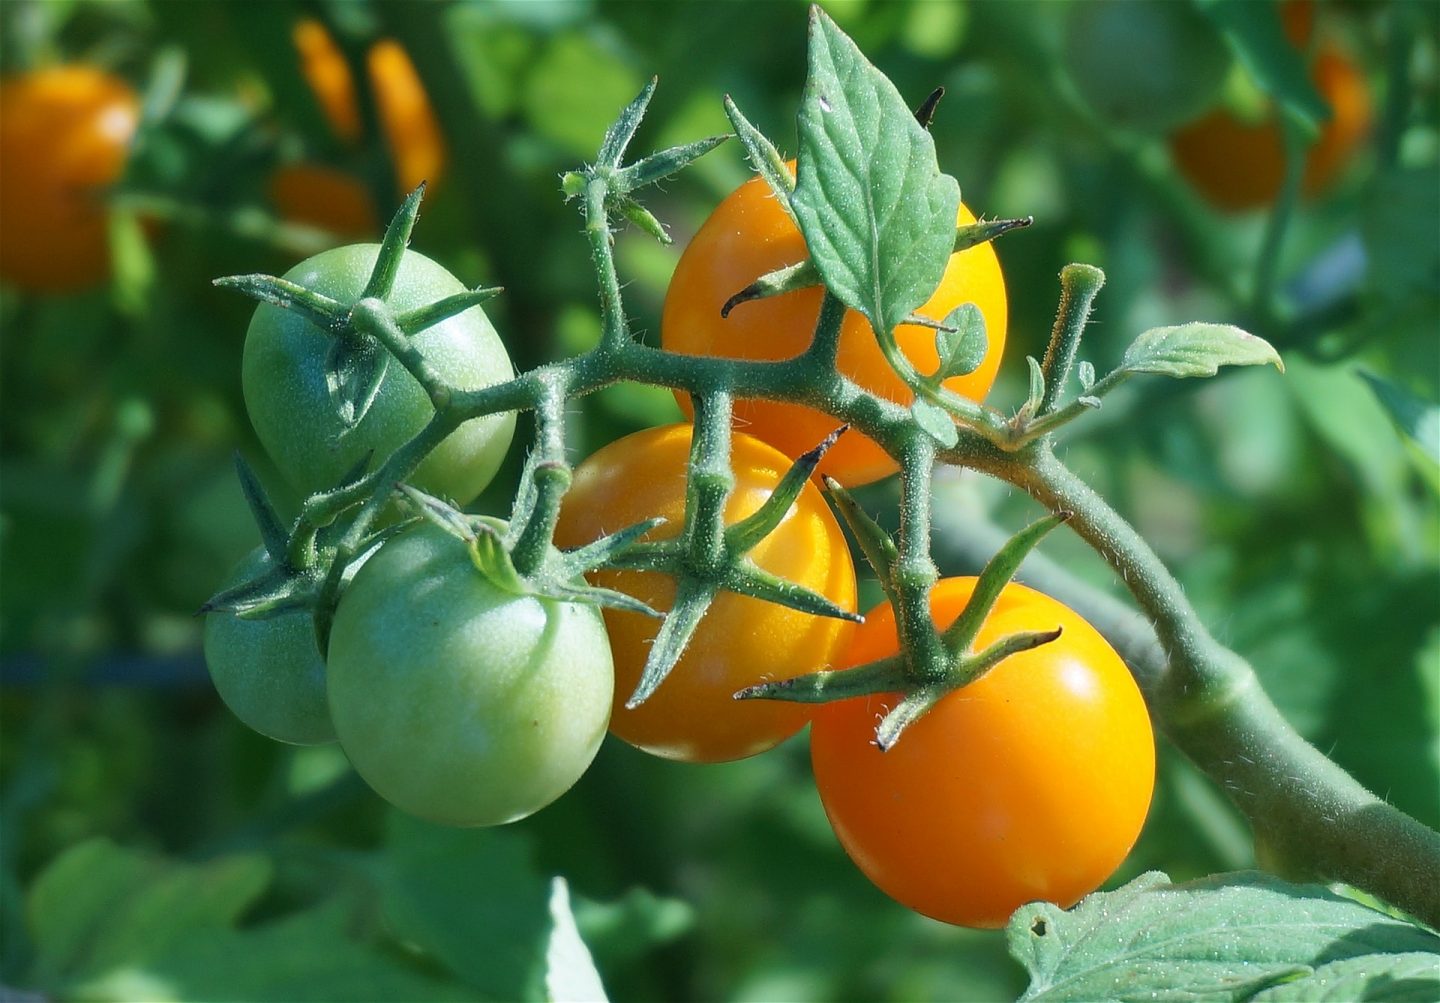 tipos de tomate